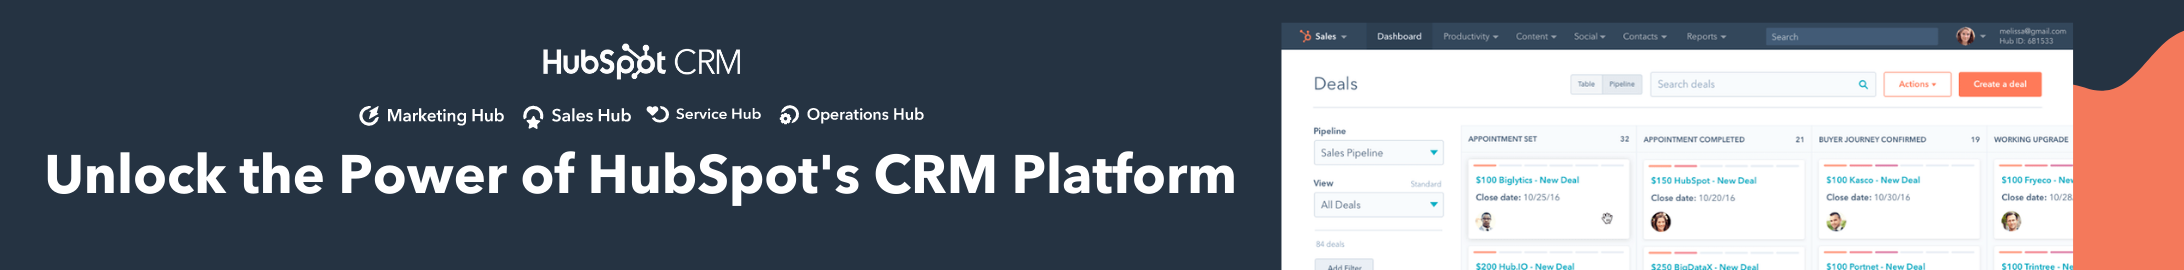 HubSpot CRM Platform